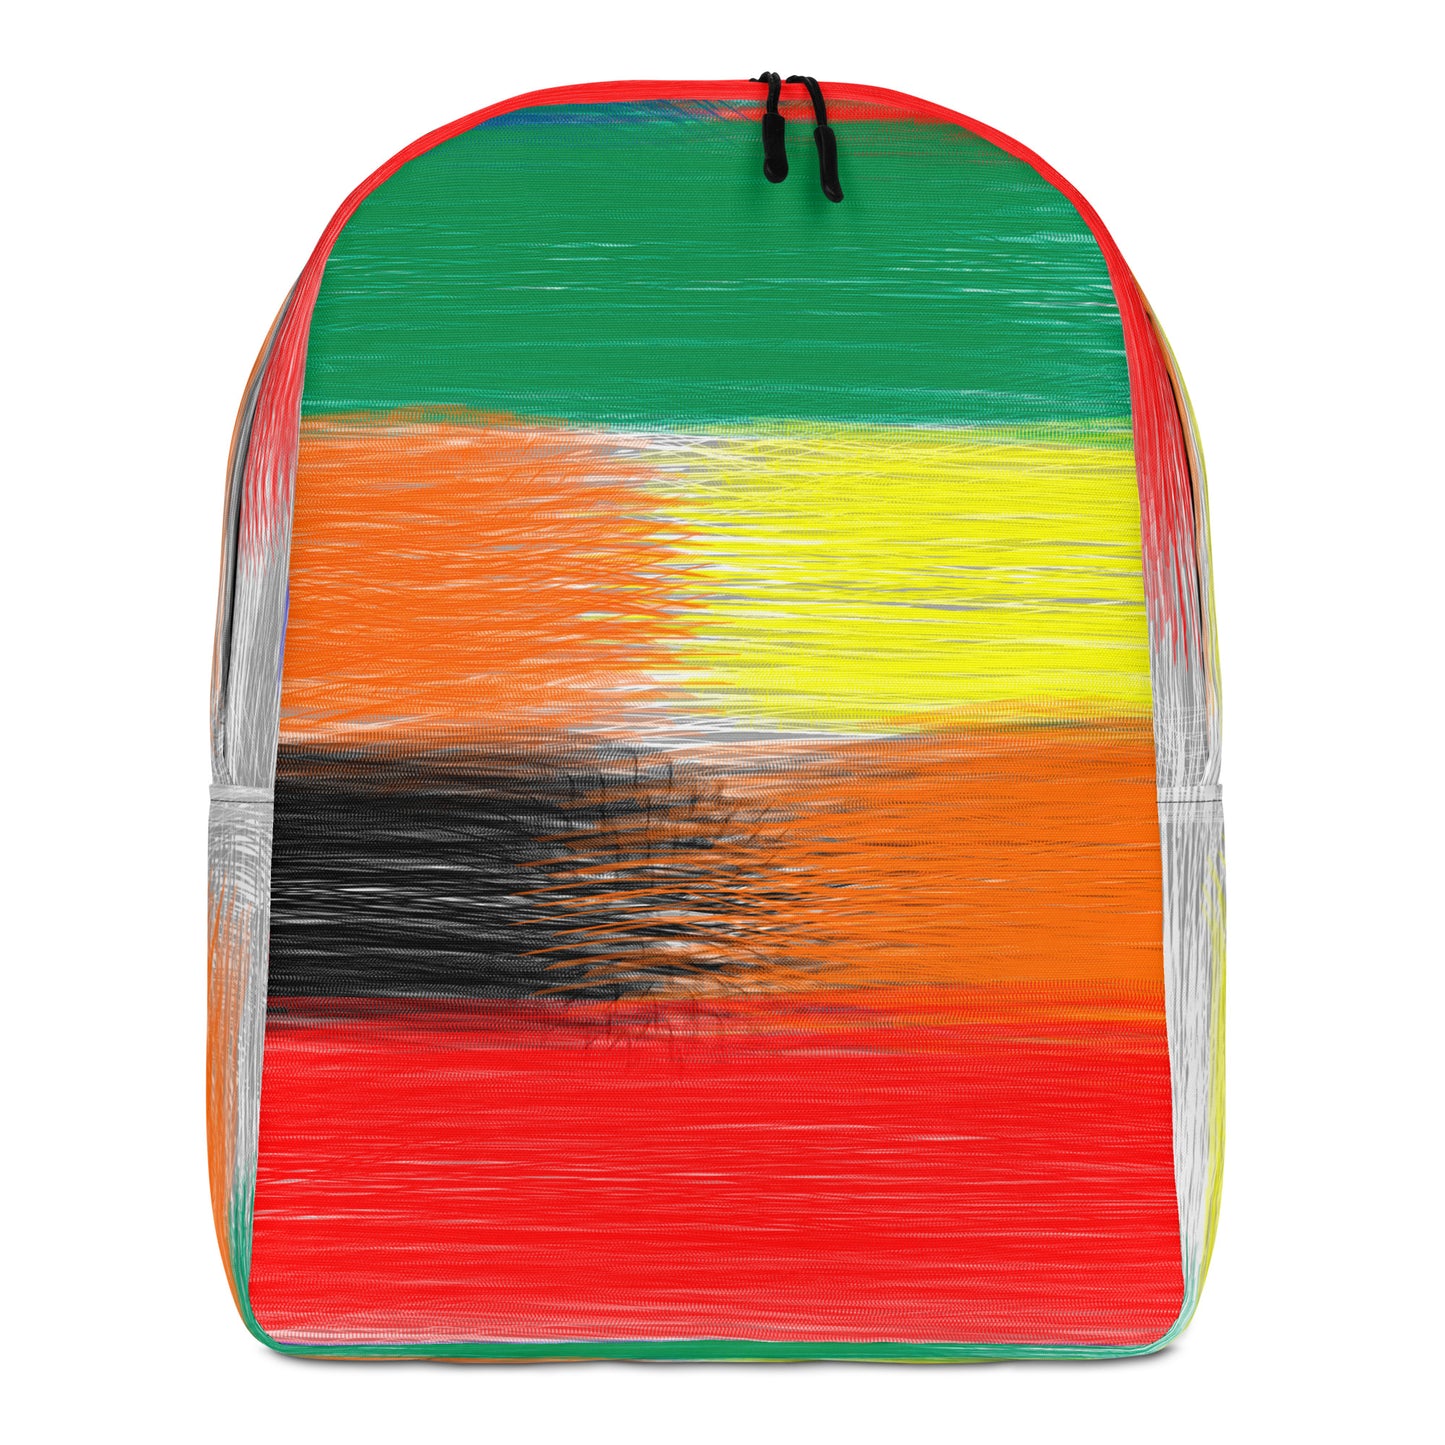 Minimal backpack